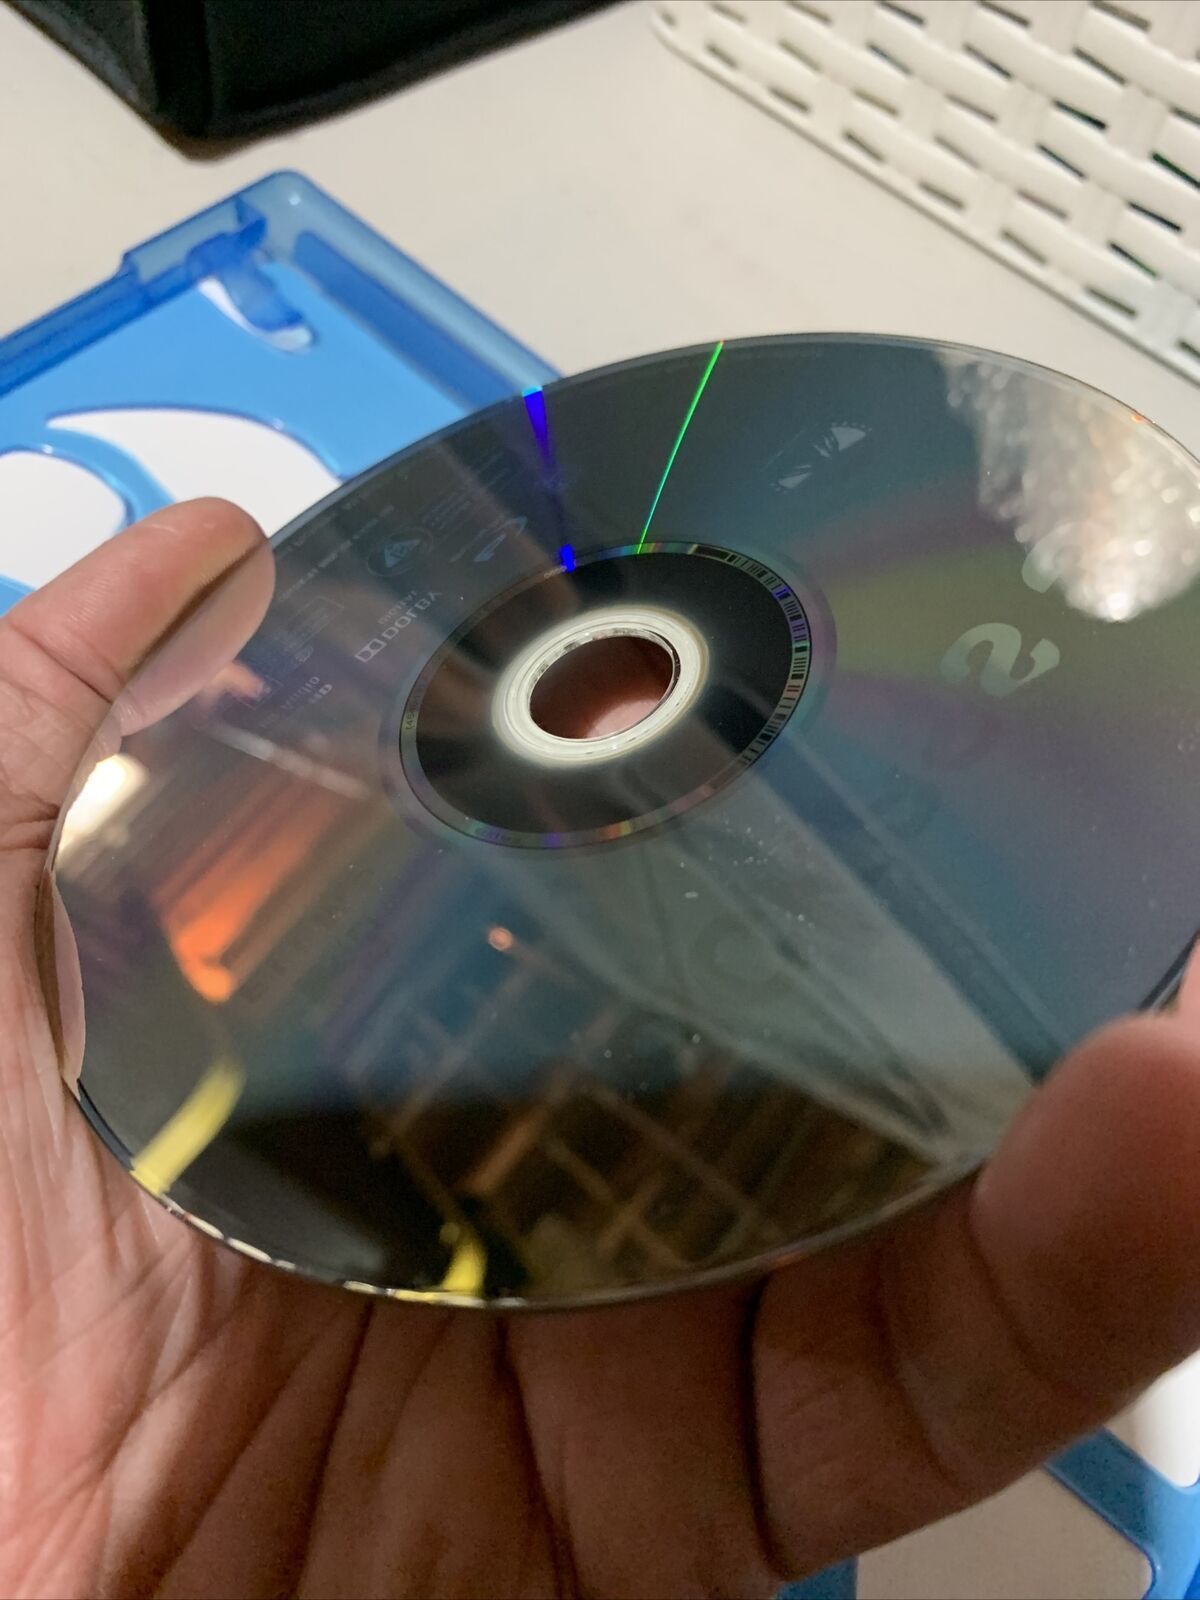 Jackass 3 (Blu-ray Disc, 2011)